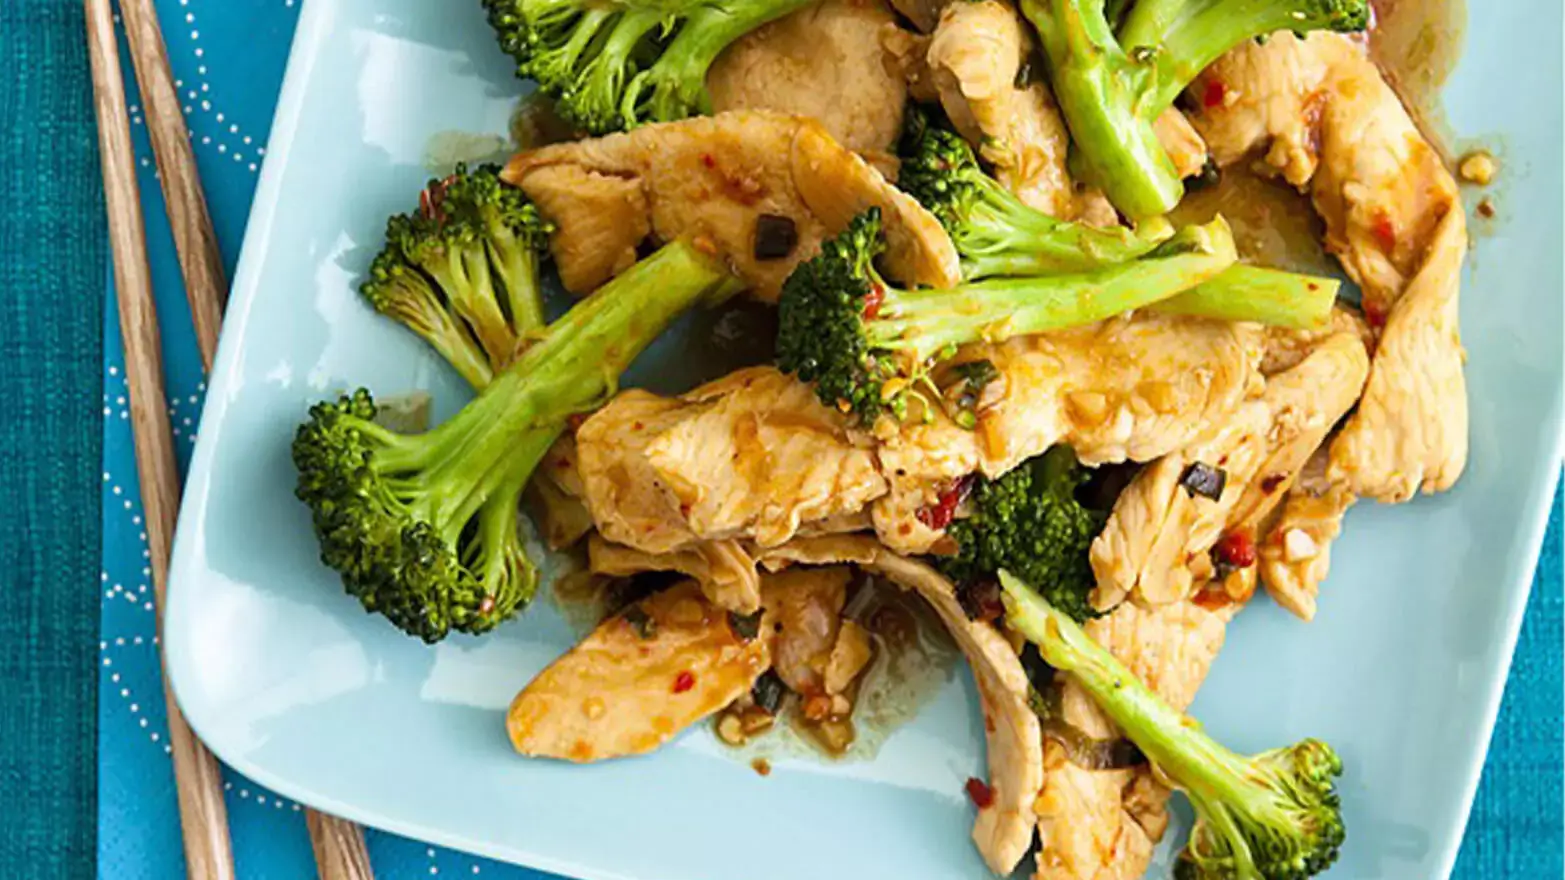 chicken stir fry with broccoli